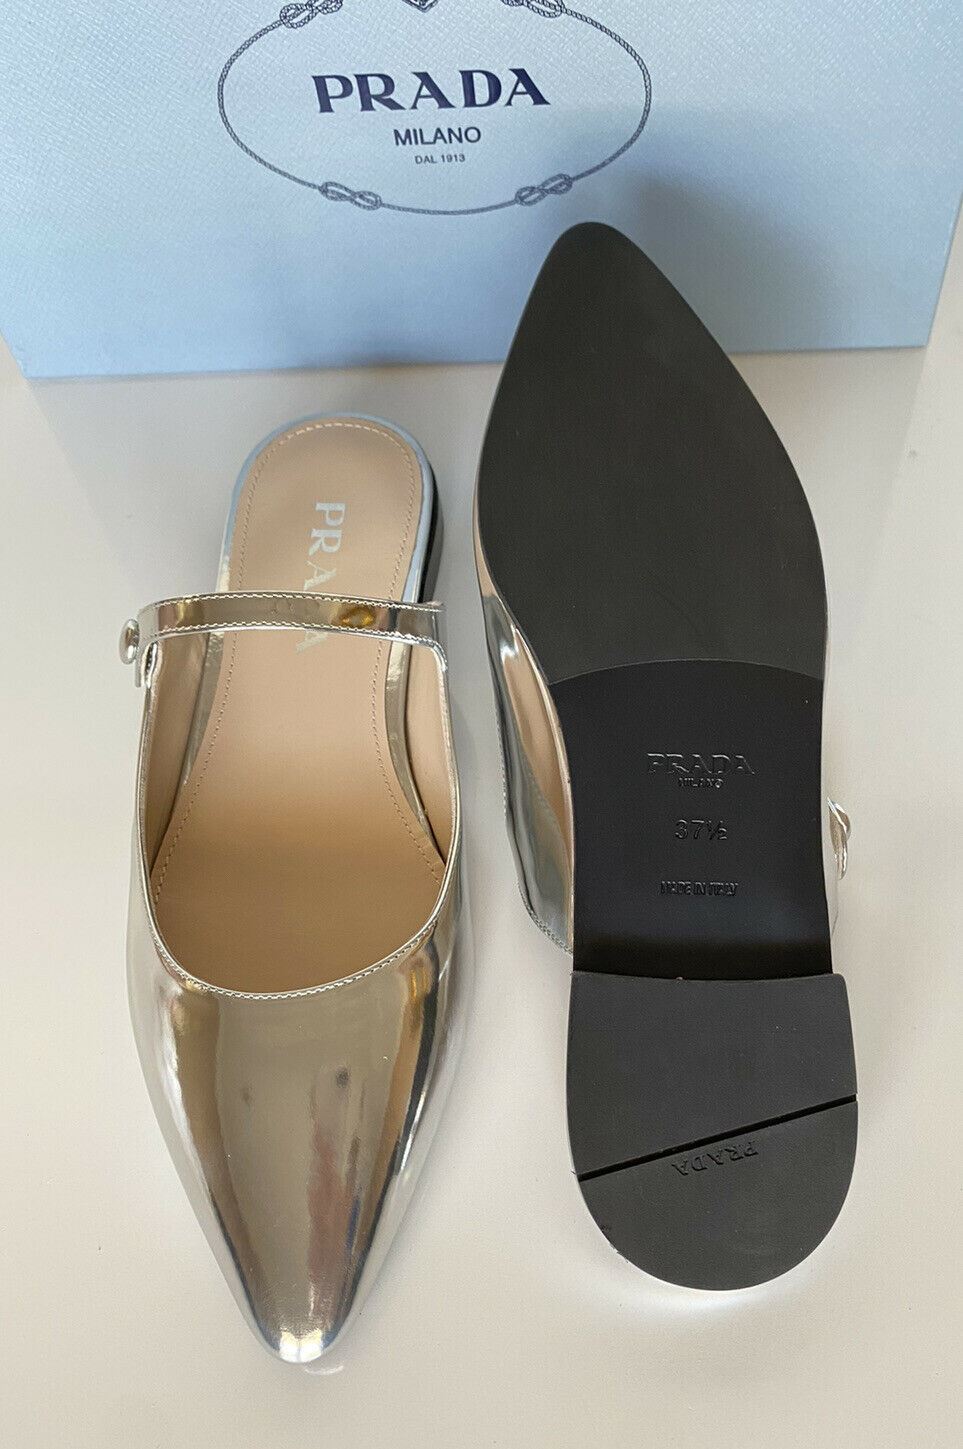 Женские кожаные сандалии-мюли цвета серебристого металлика NIB PRADA 7,5 US 1F534L IT 